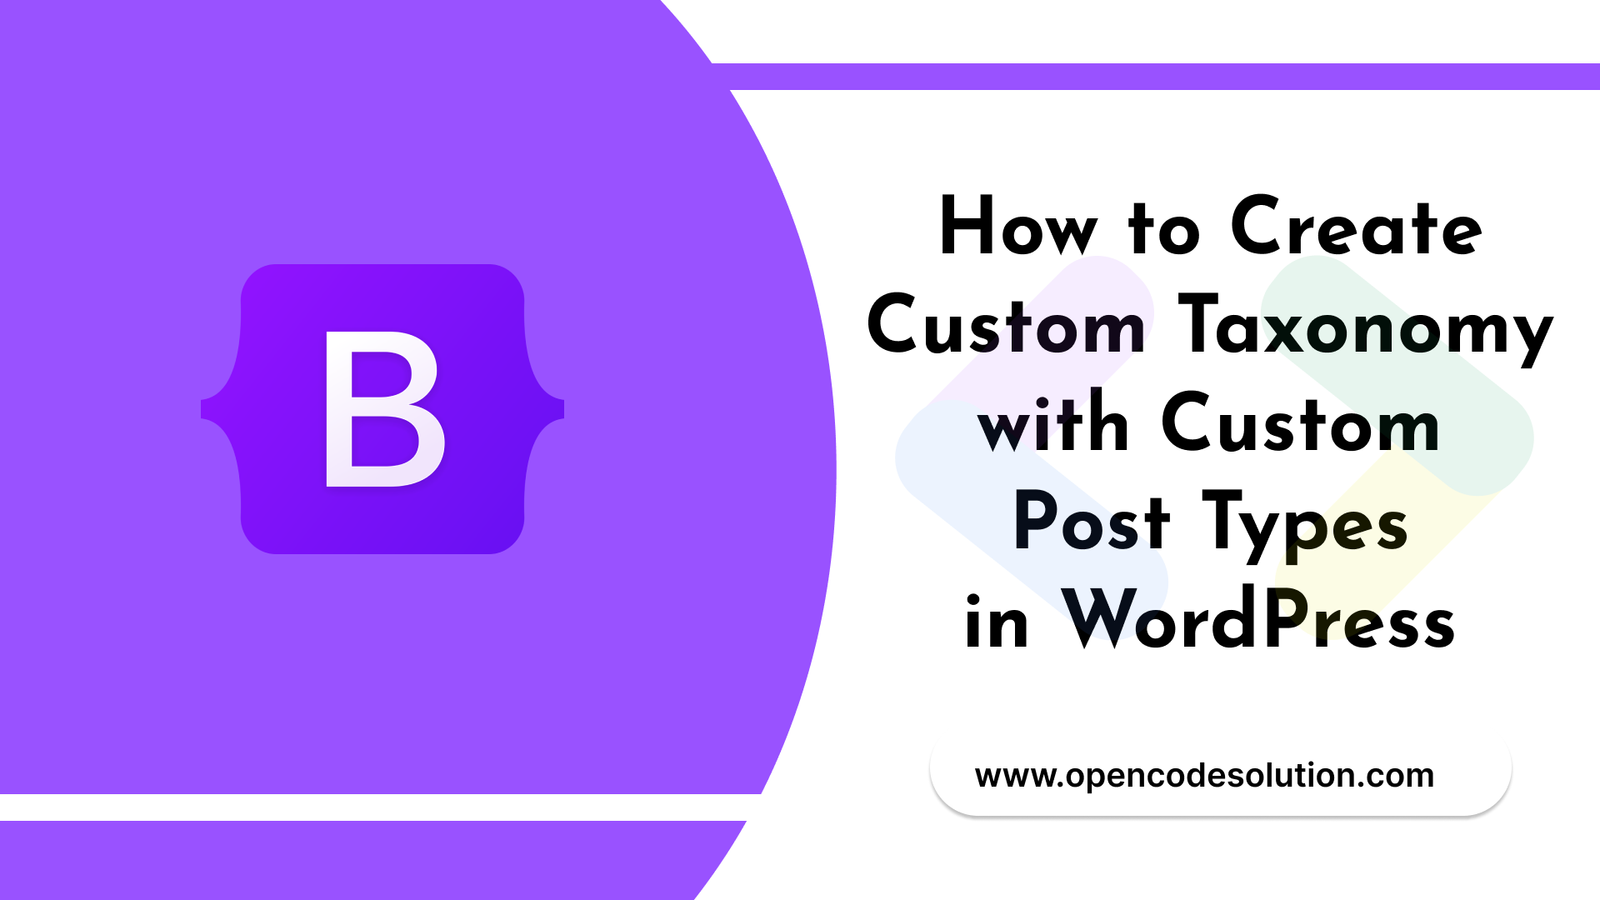 How to Create Custom Taxonomy with Custom Post Types in WordPress